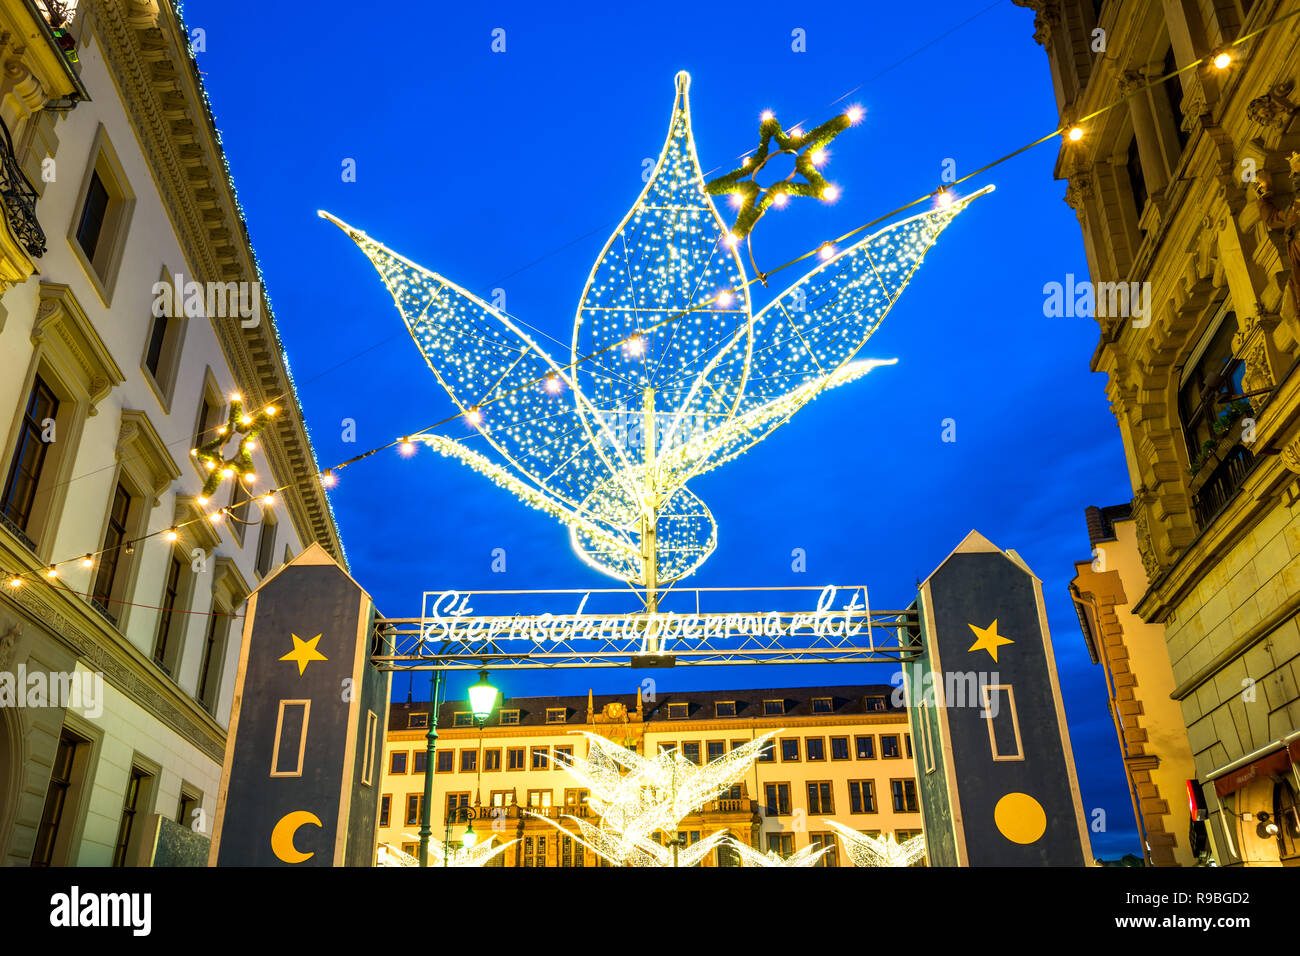 Christmas Market, Wiesbaden, Germany Stock Photo